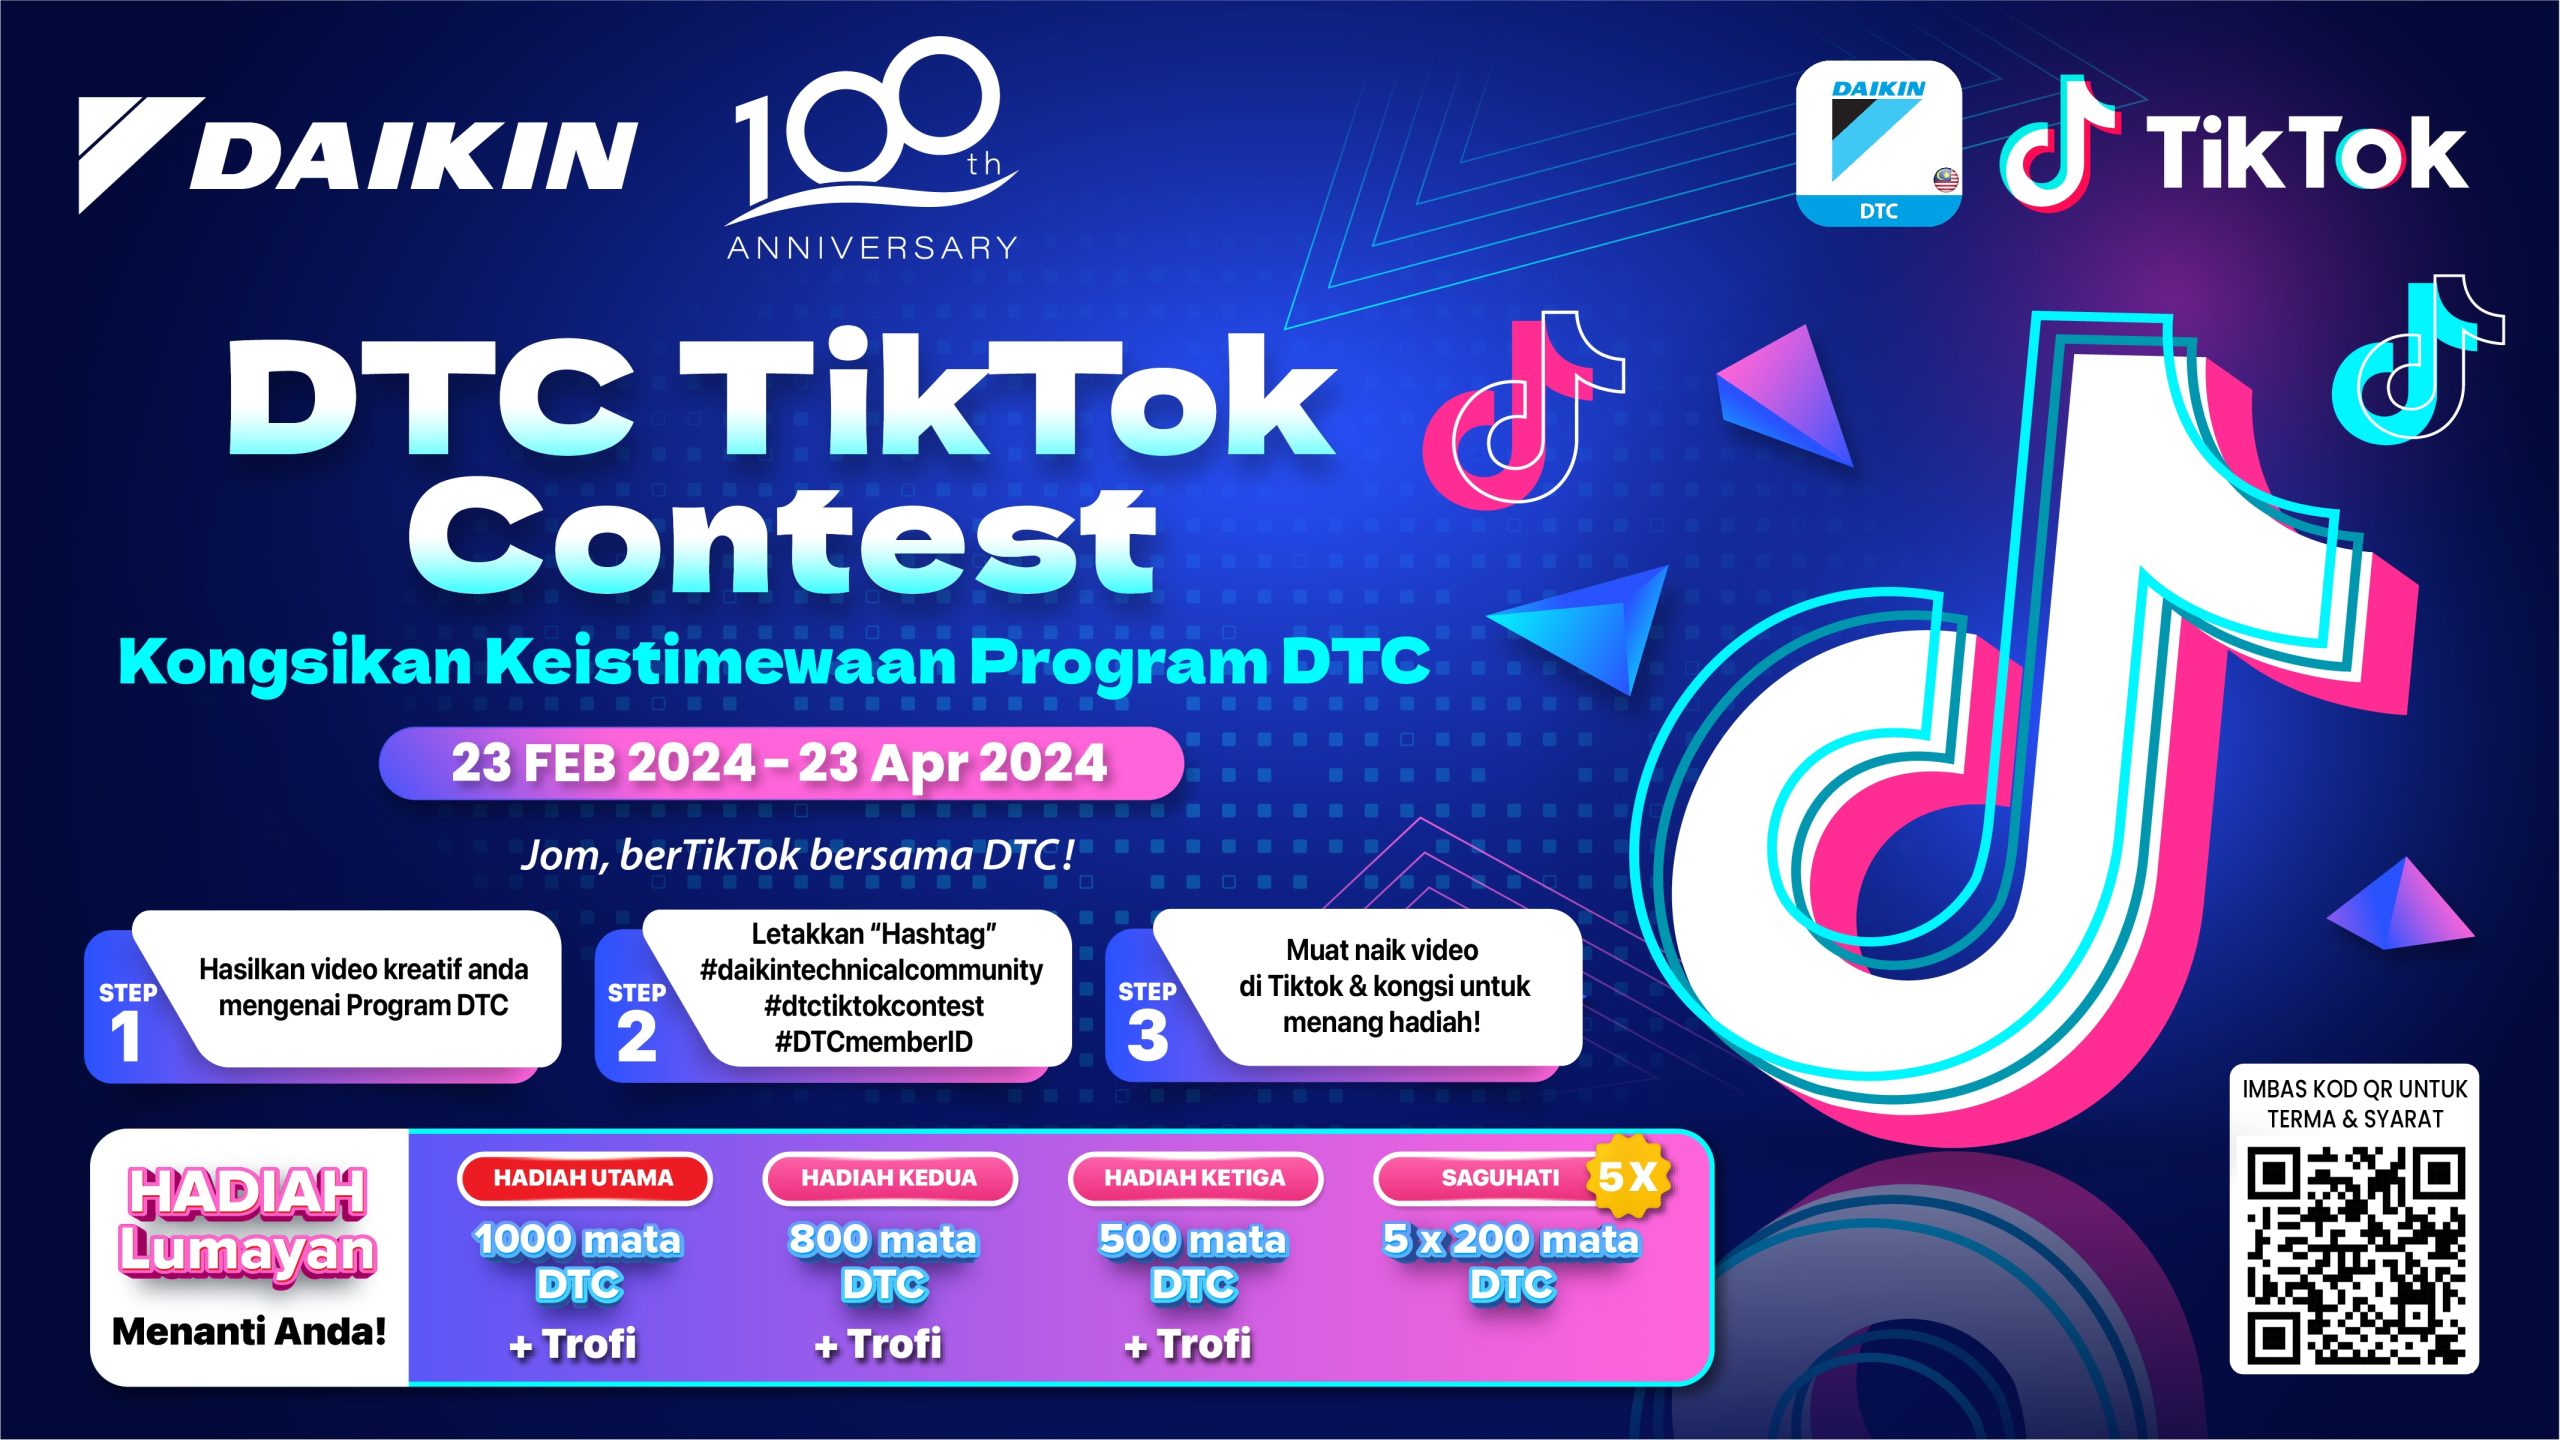 DTC TikTok Contest | Daikin Malaysia